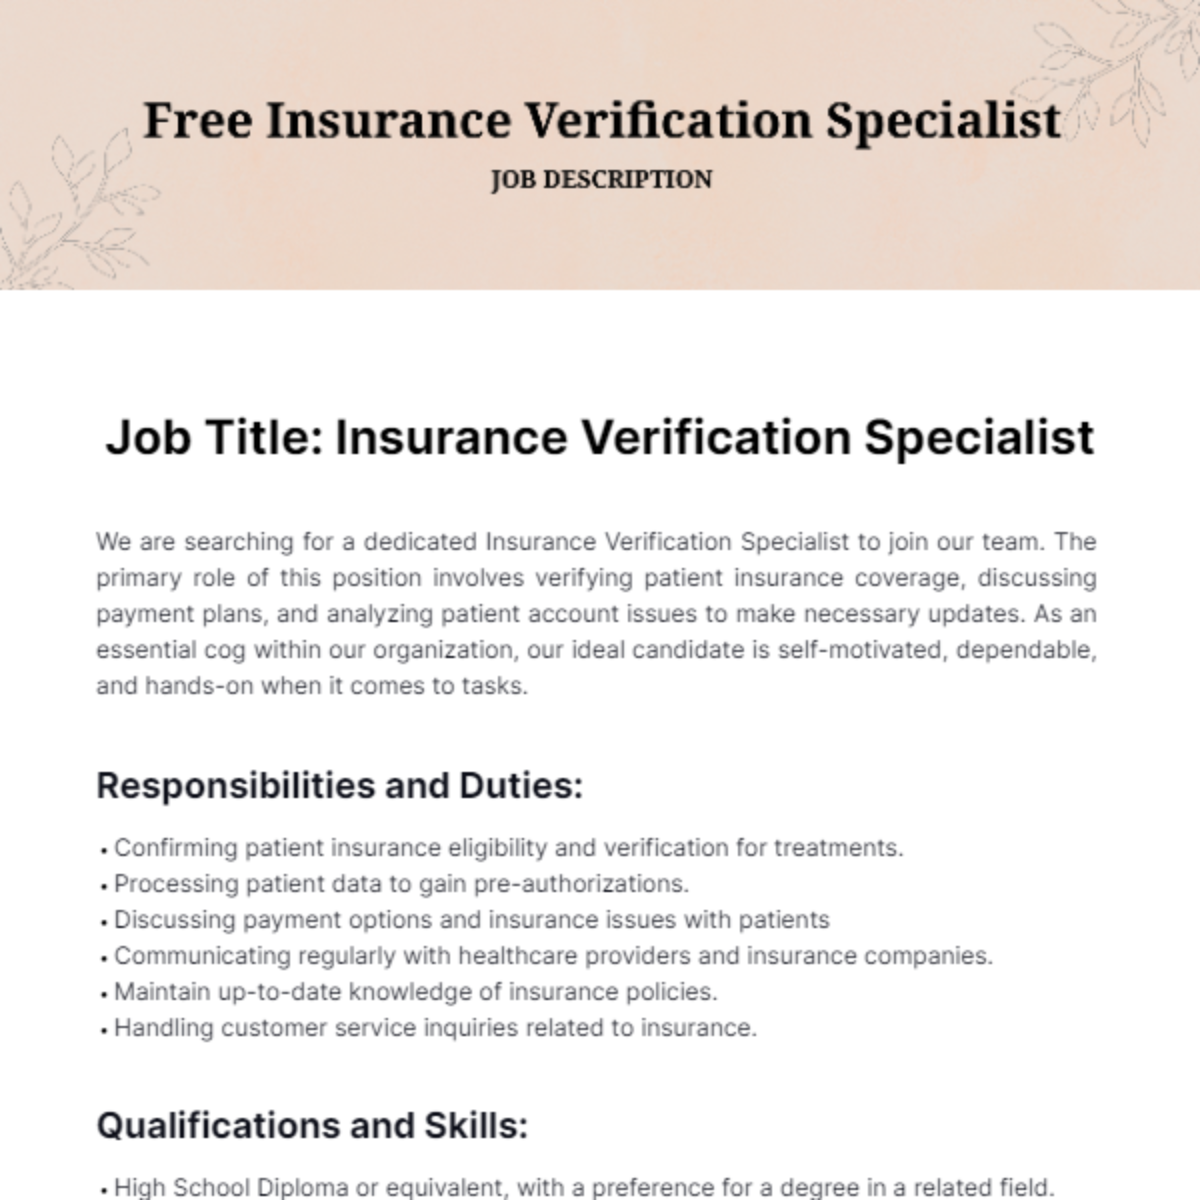 Free Insurance Verification Specialist Job Description Template